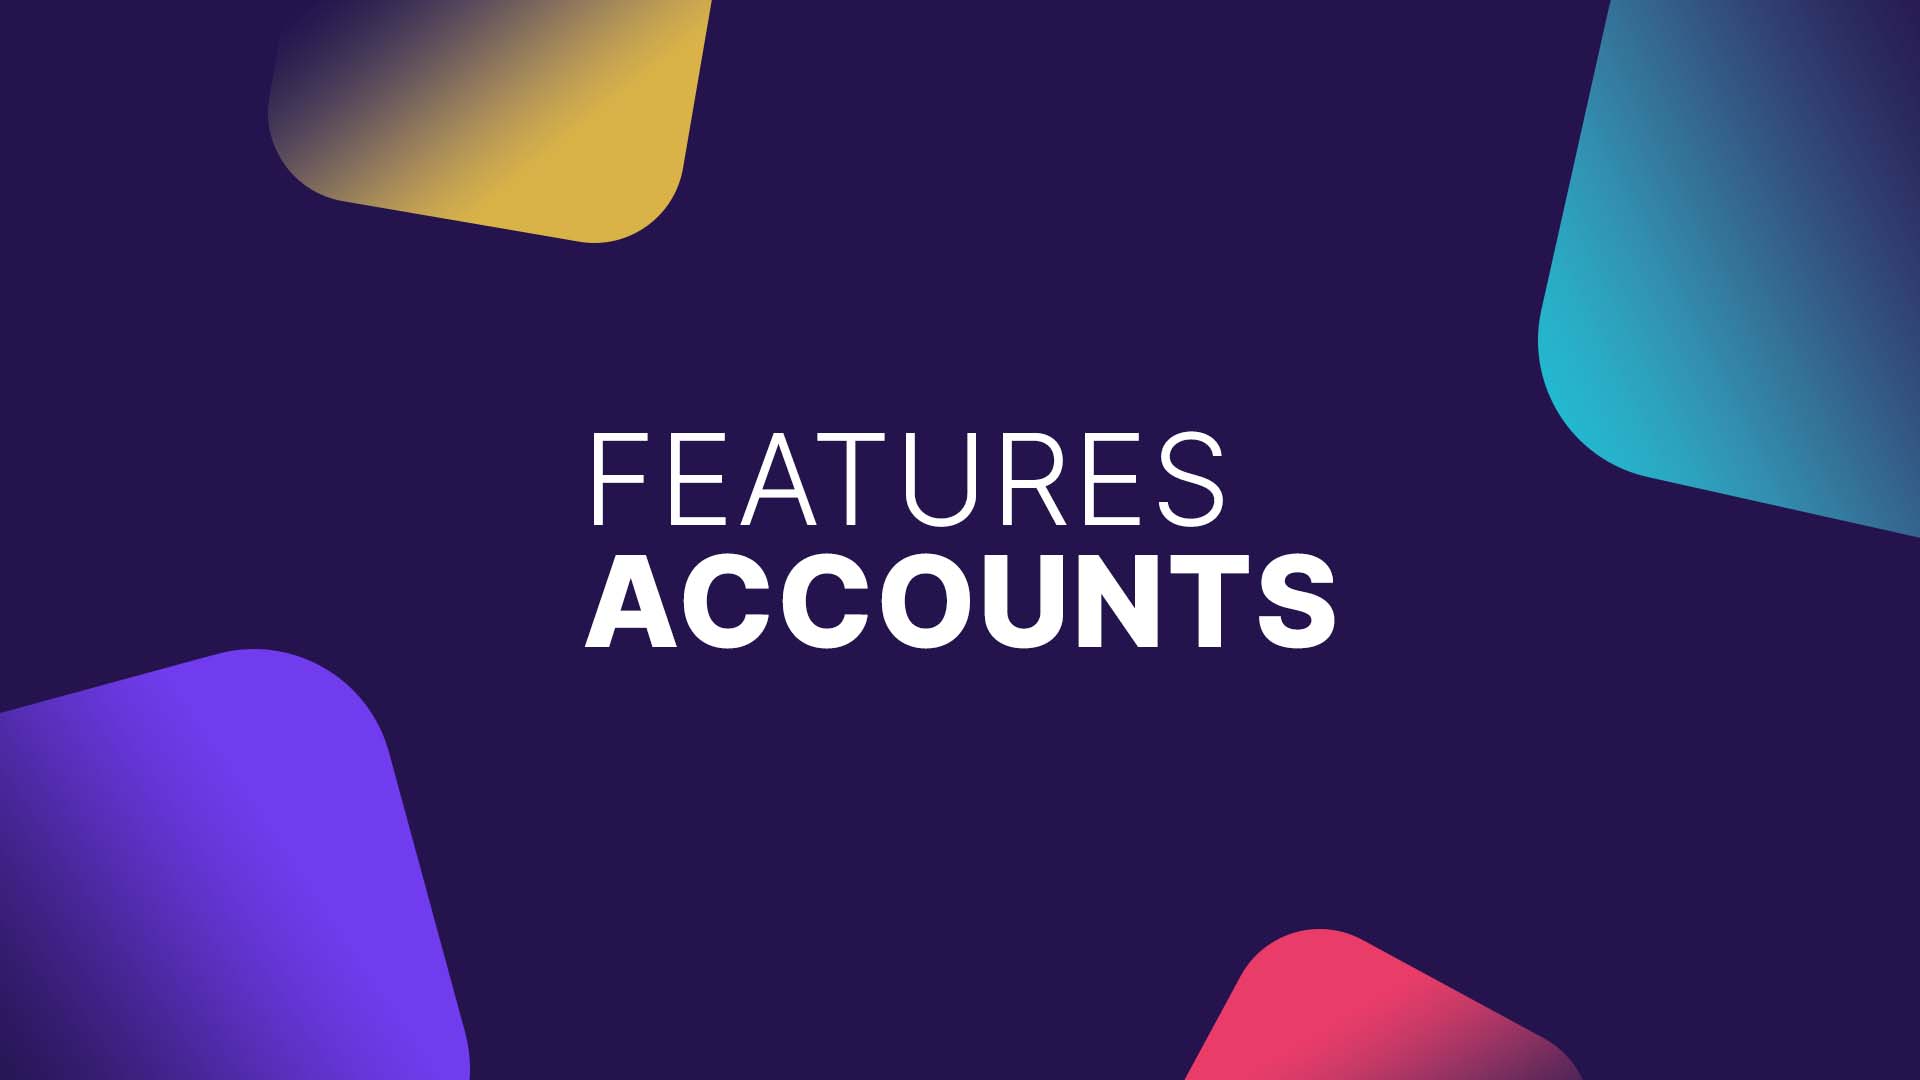 Account Features Cover Bild